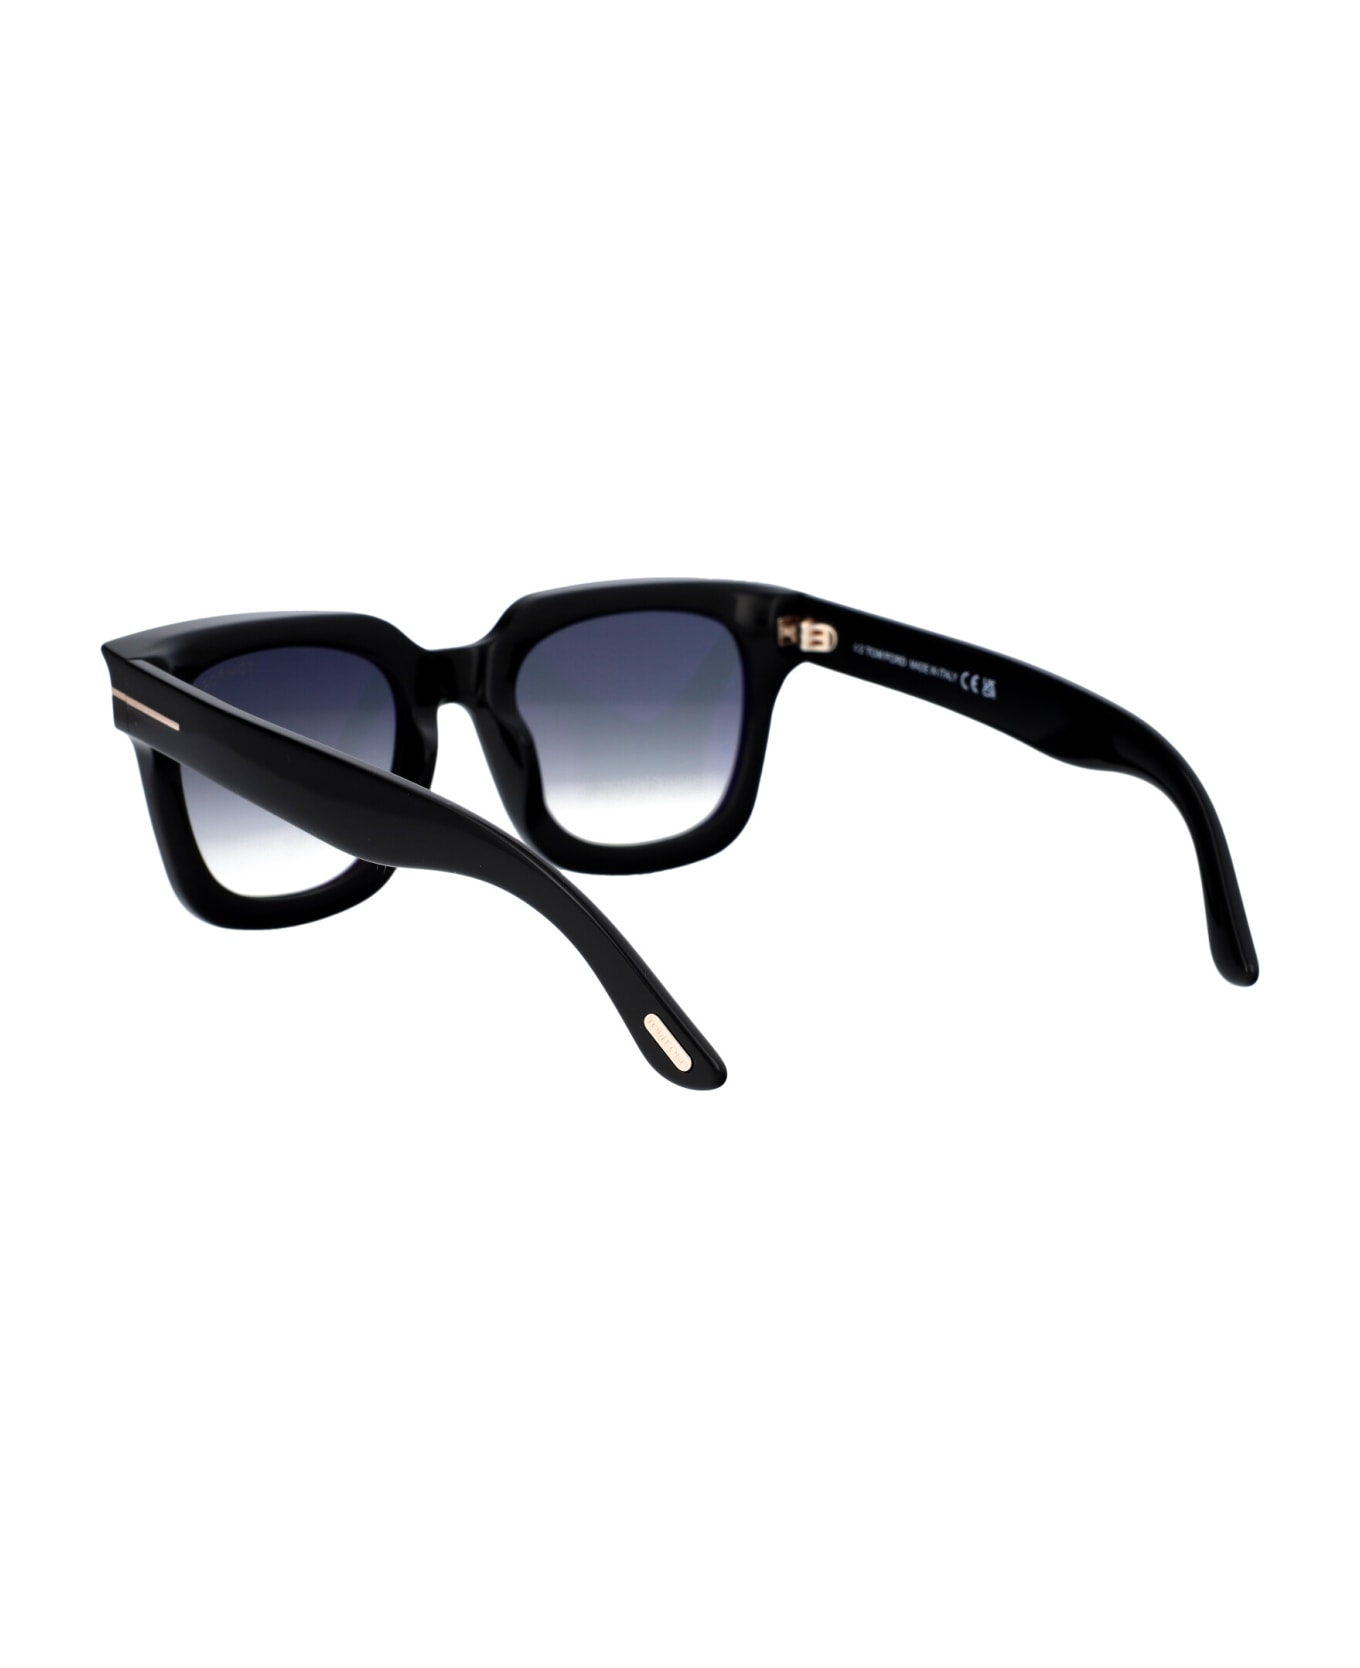 Tom Ford Eyewear Leigh-02 Sunglasses - 01B Nero Lucido / Fumo Grad サングラス